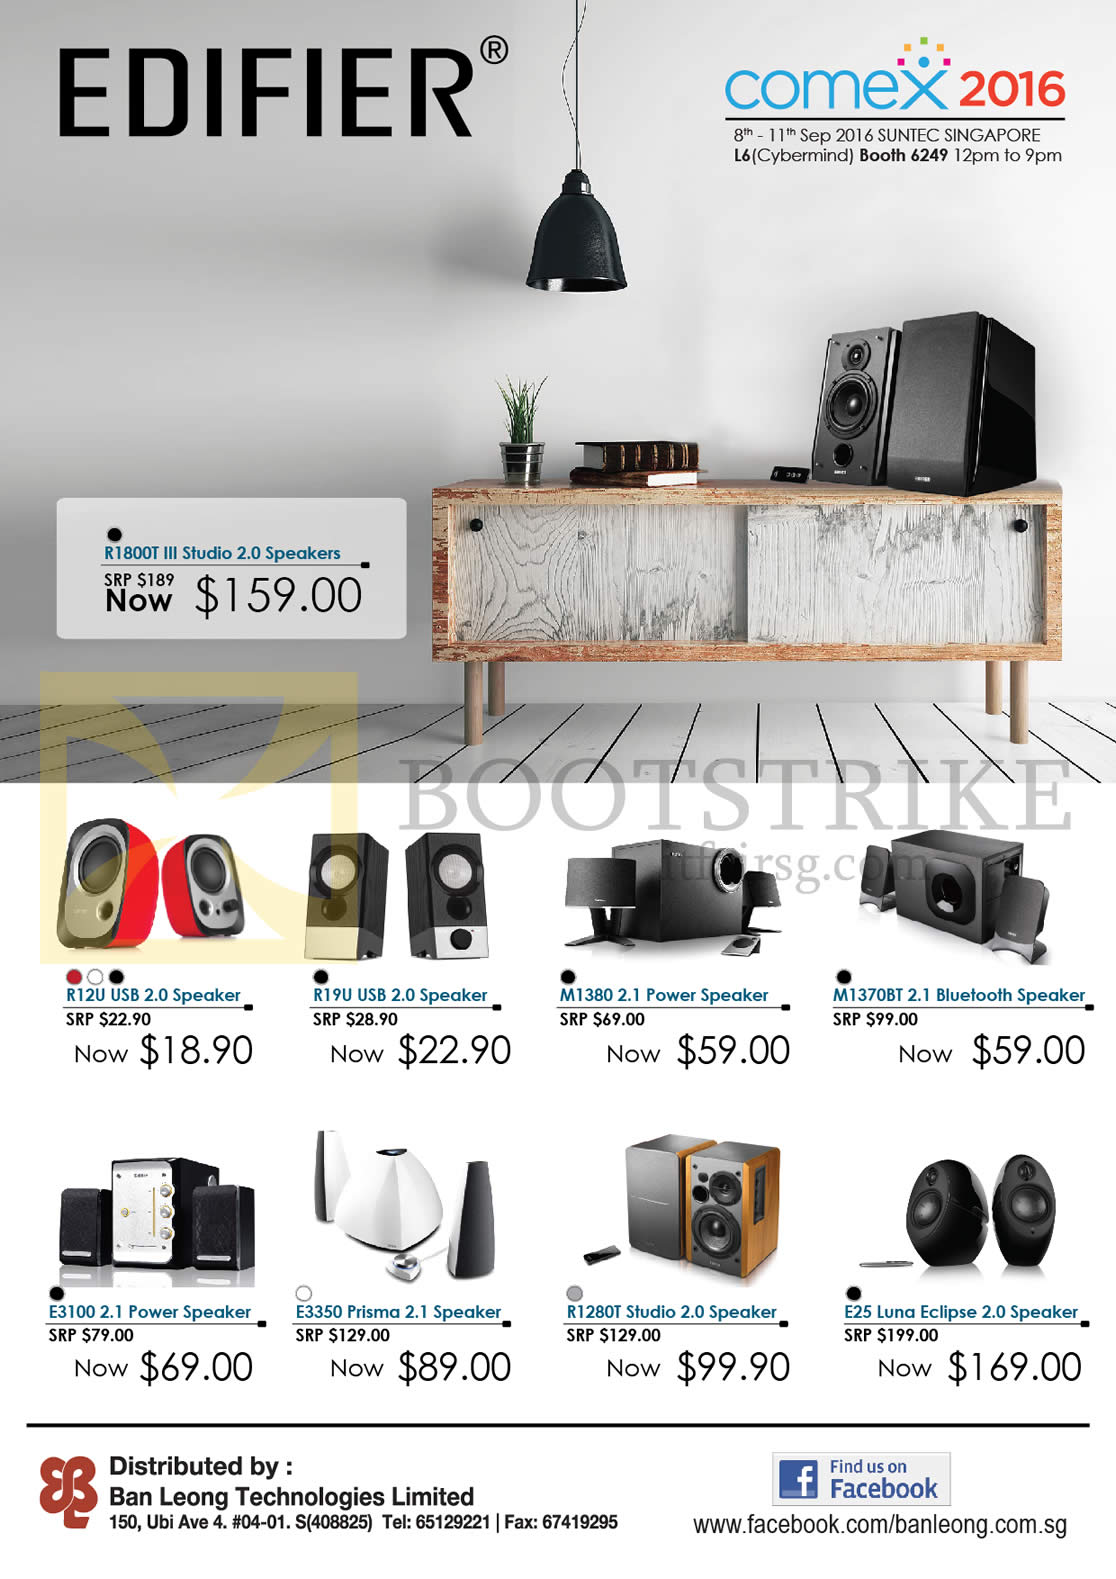 COMEX 2016 price list image brochure of Cybermind Edifier Speakers R12U, R19U, M1380, M1370BT, E3100, E3350 Prisma 2.1, R1280T Studio 2.0, E25 Luna Eclipse 2.0